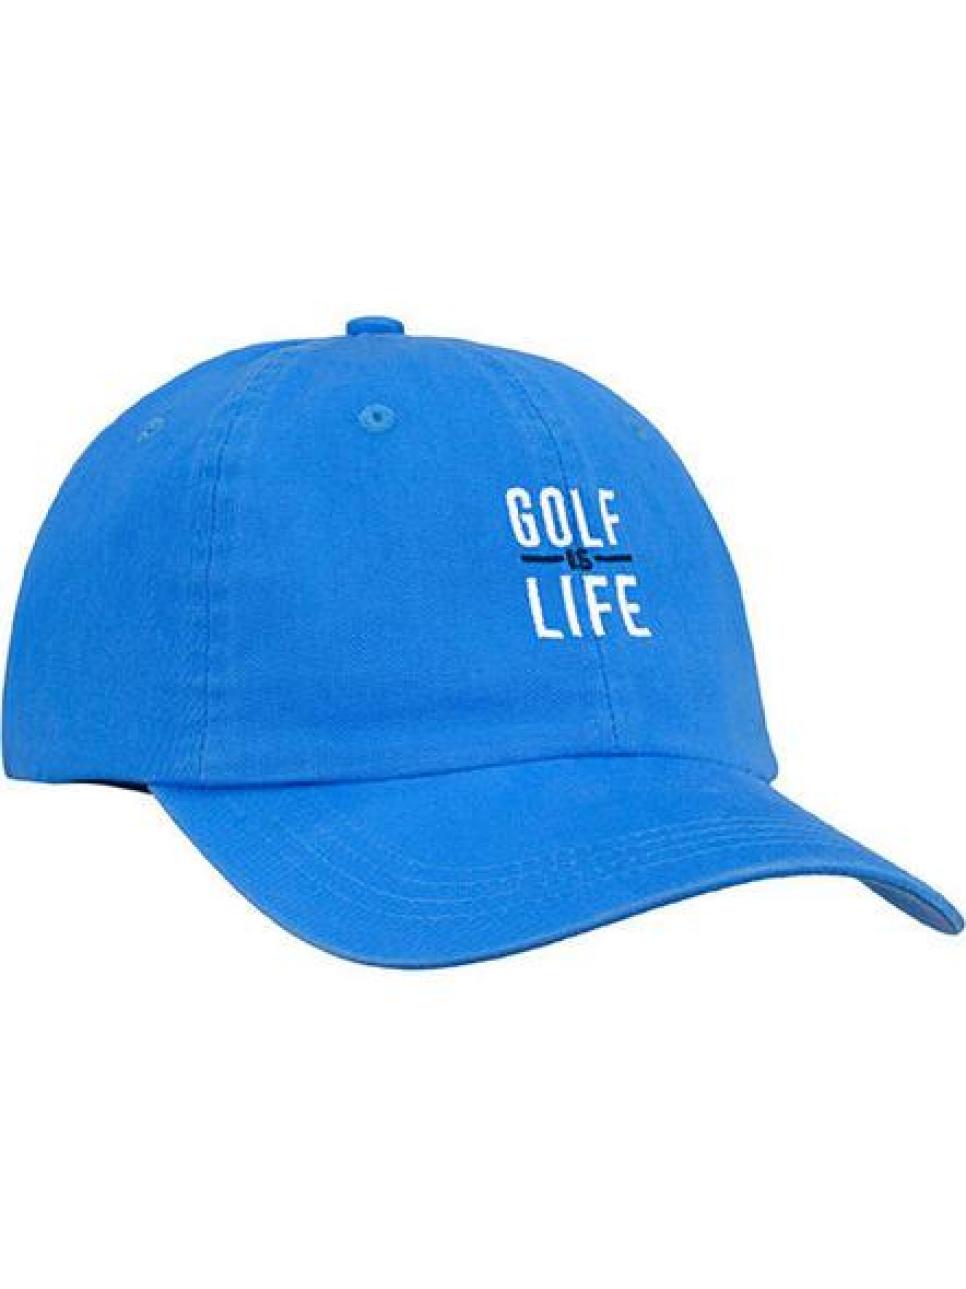 rx-aheadnewport-golf-is-life-stacked-adjustable-cap.jpeg